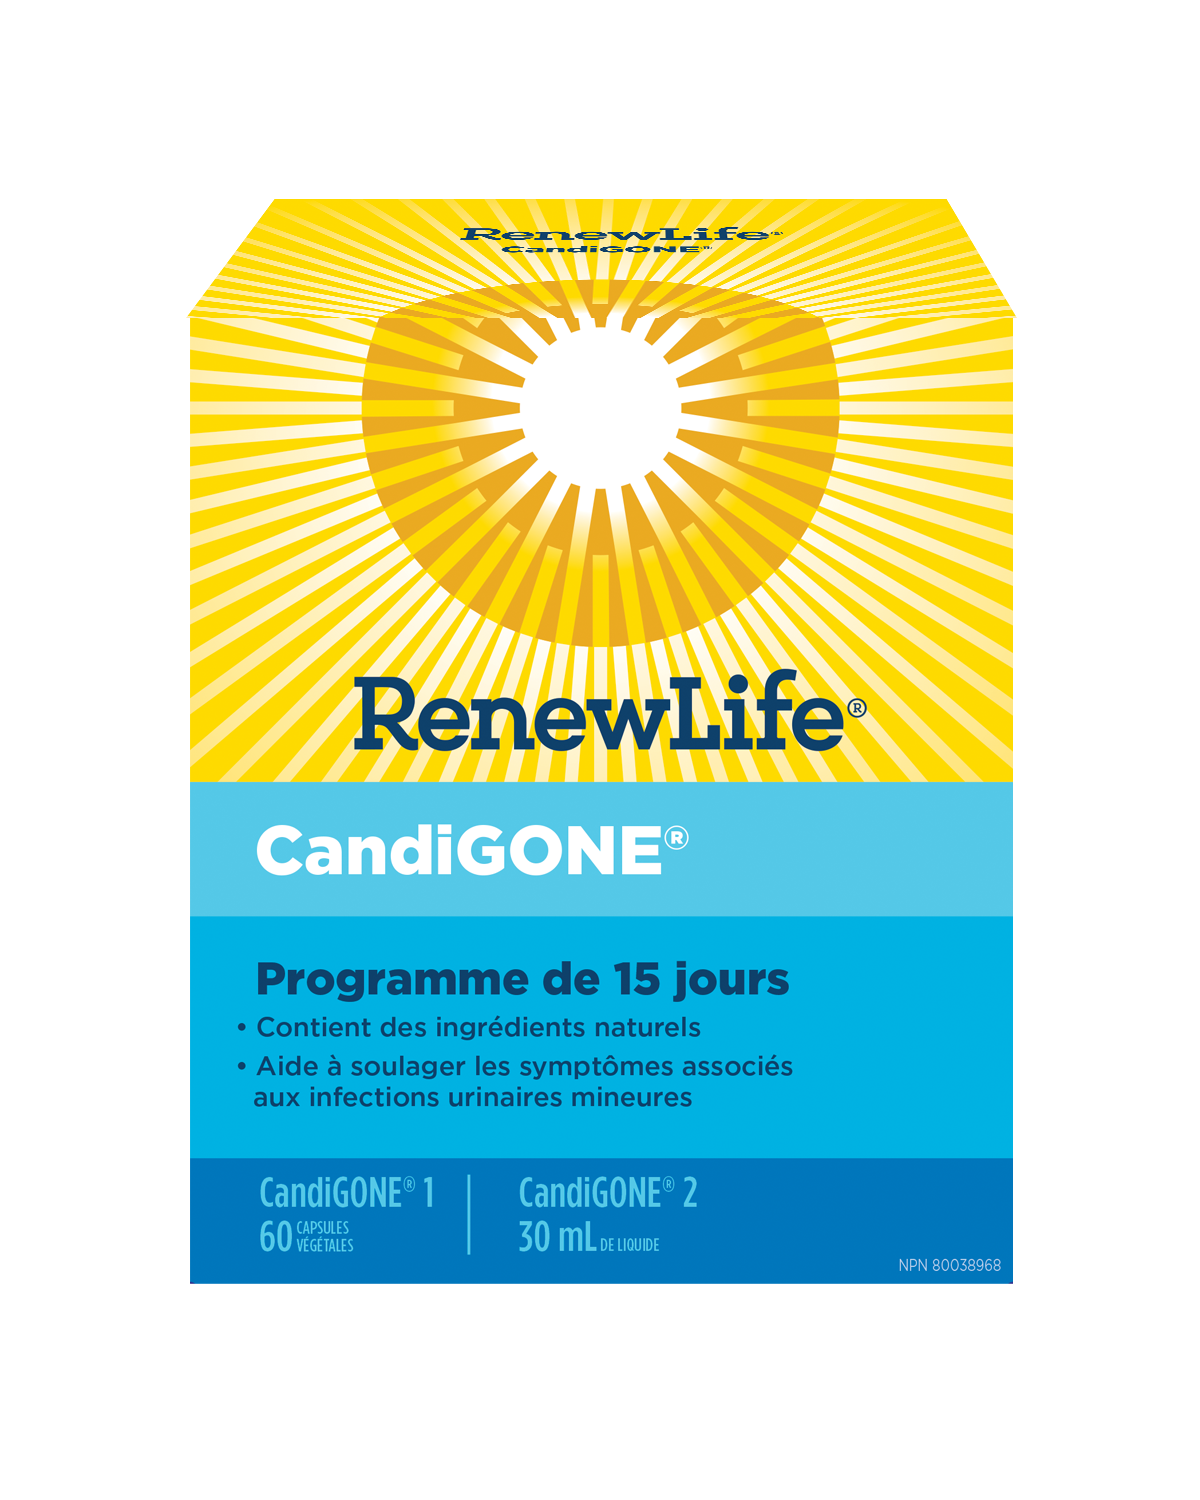 Candigone RenewLife Programme de 15 jours